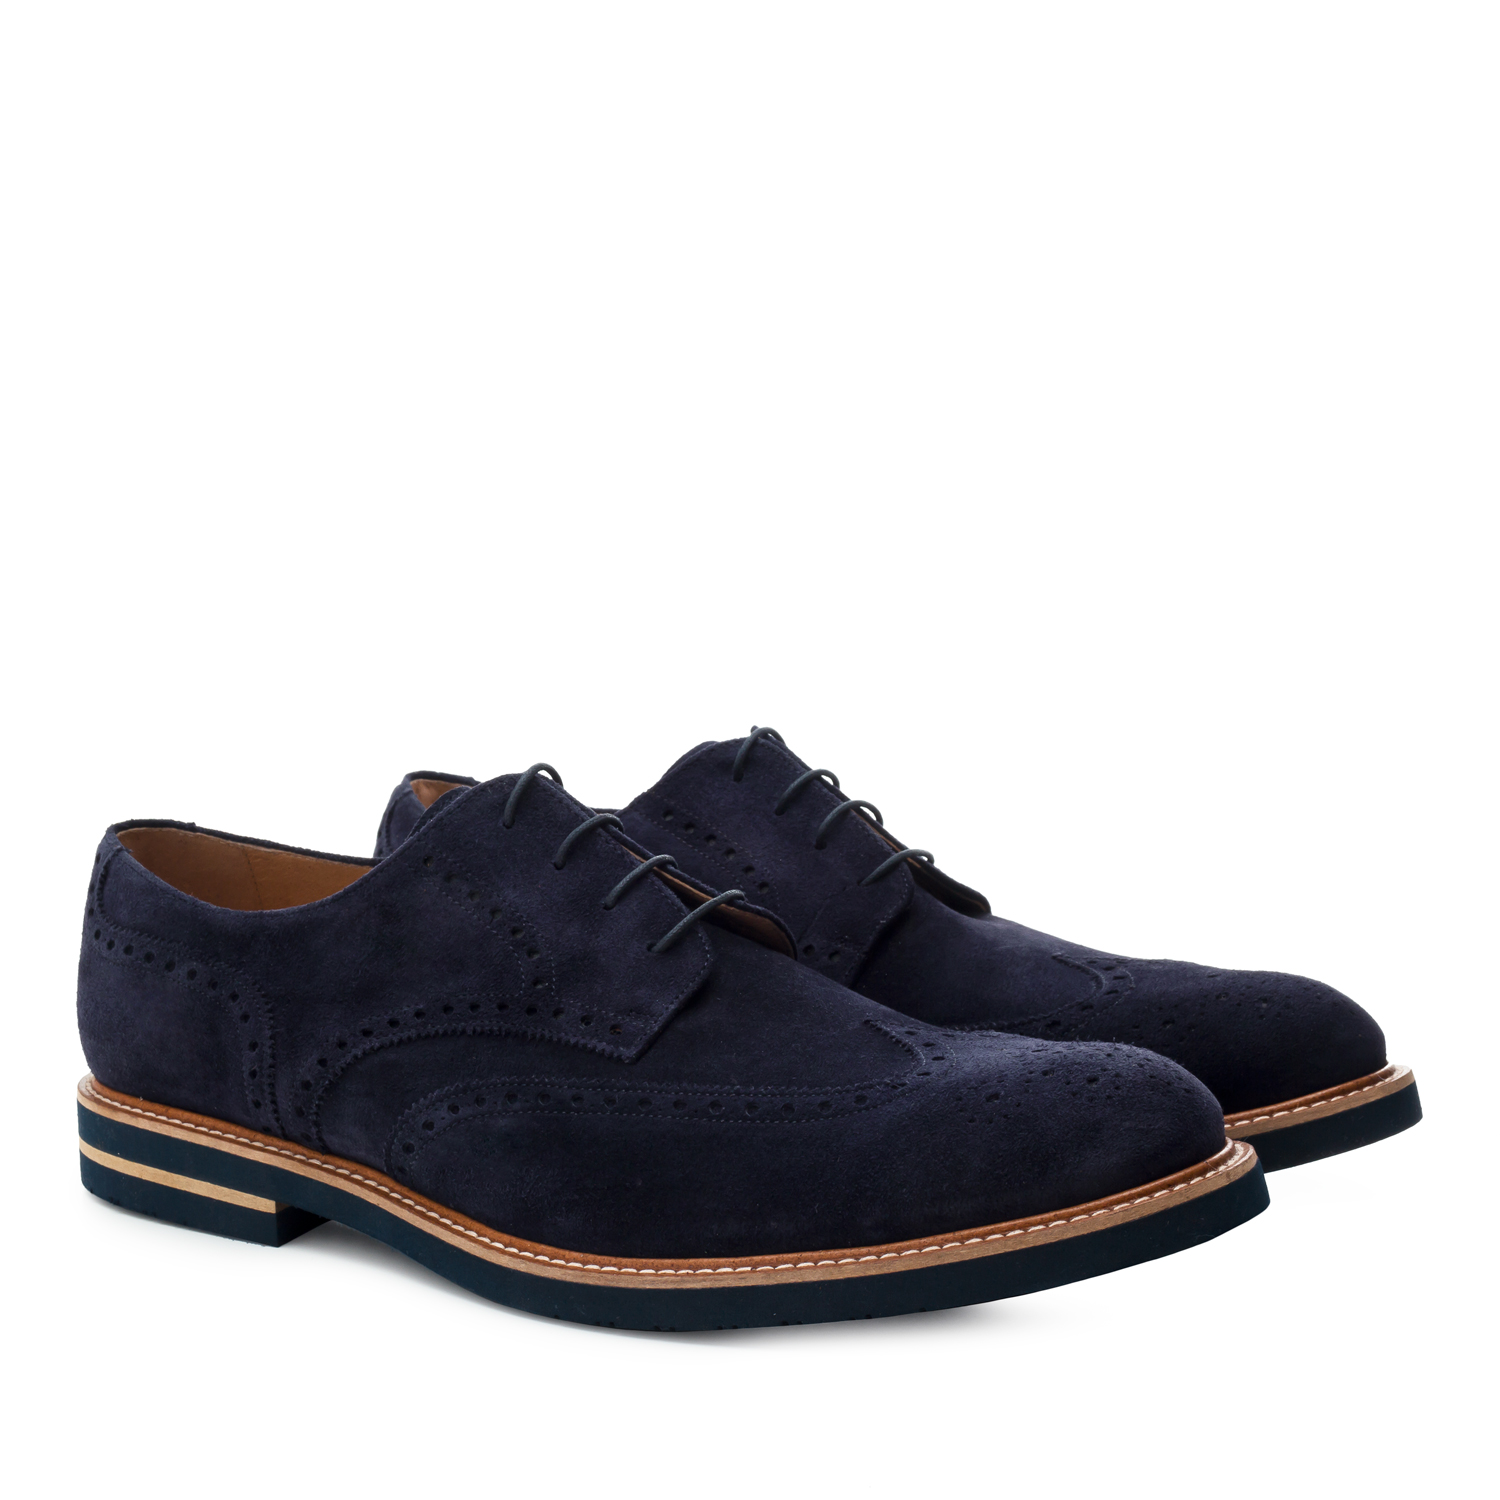 Chaussures Style Oxford cuir suéde Bleu Marine 